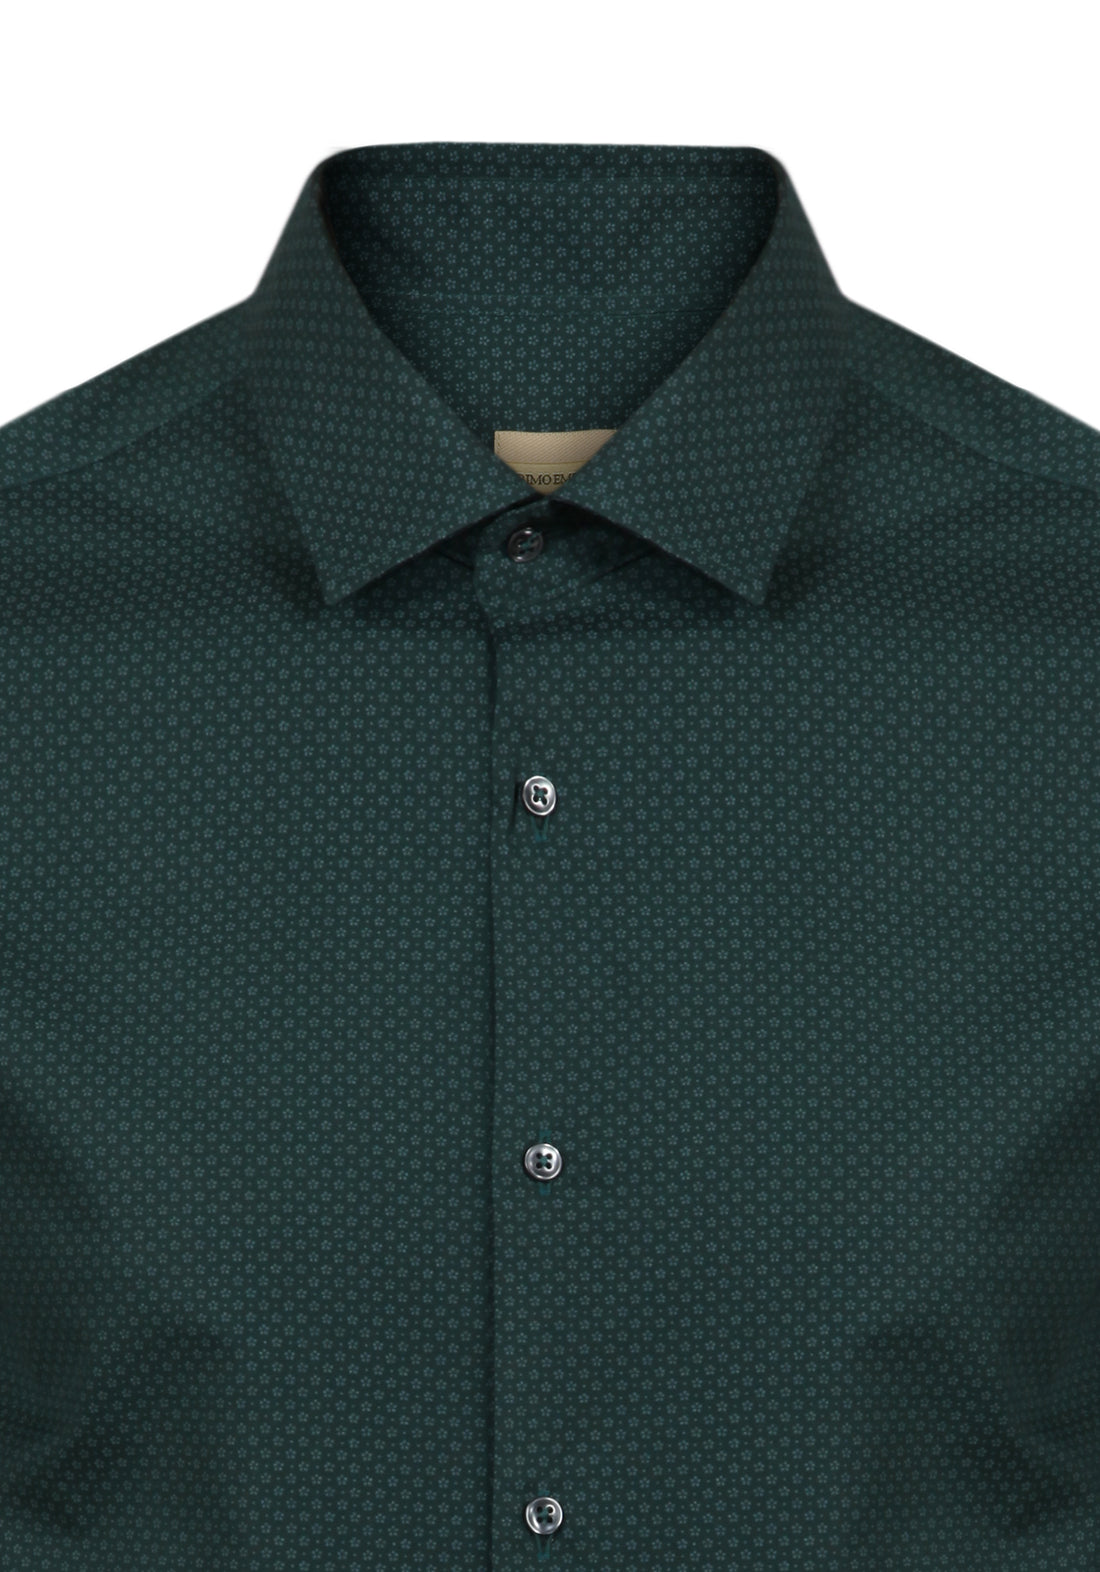 Green Micro Patterned Shirt